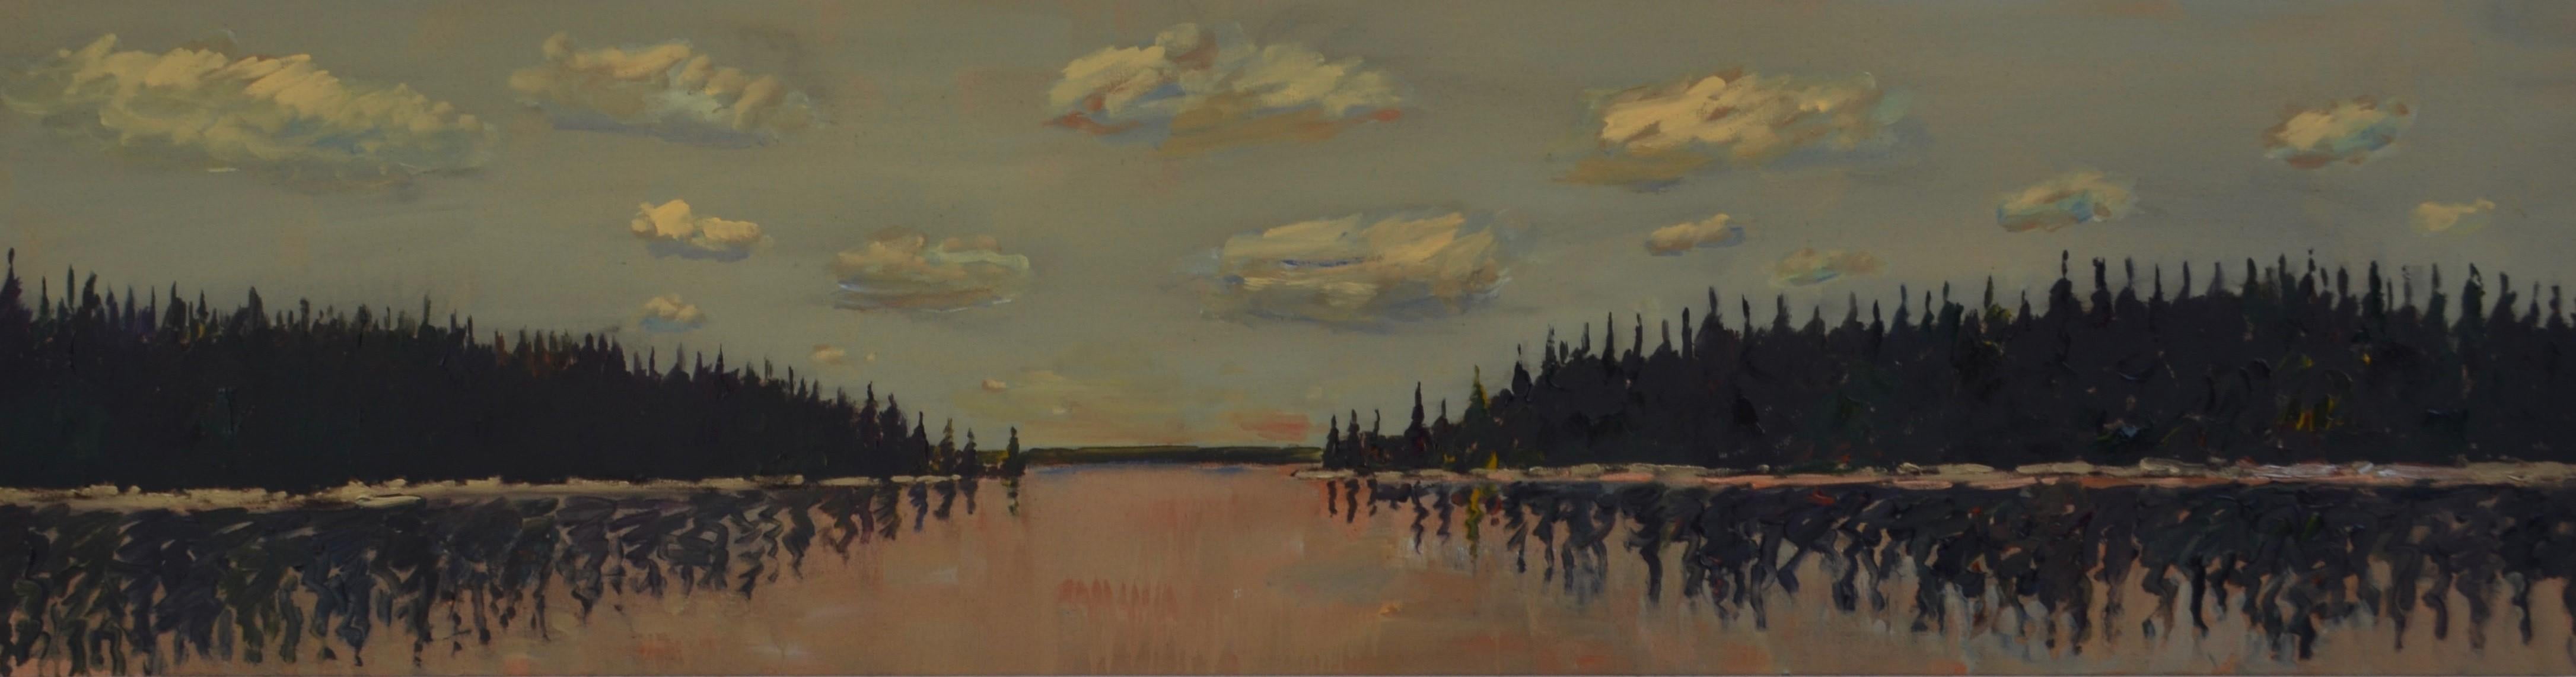 Gregory Hardy Landscape Painting - Passage Towards Dusk